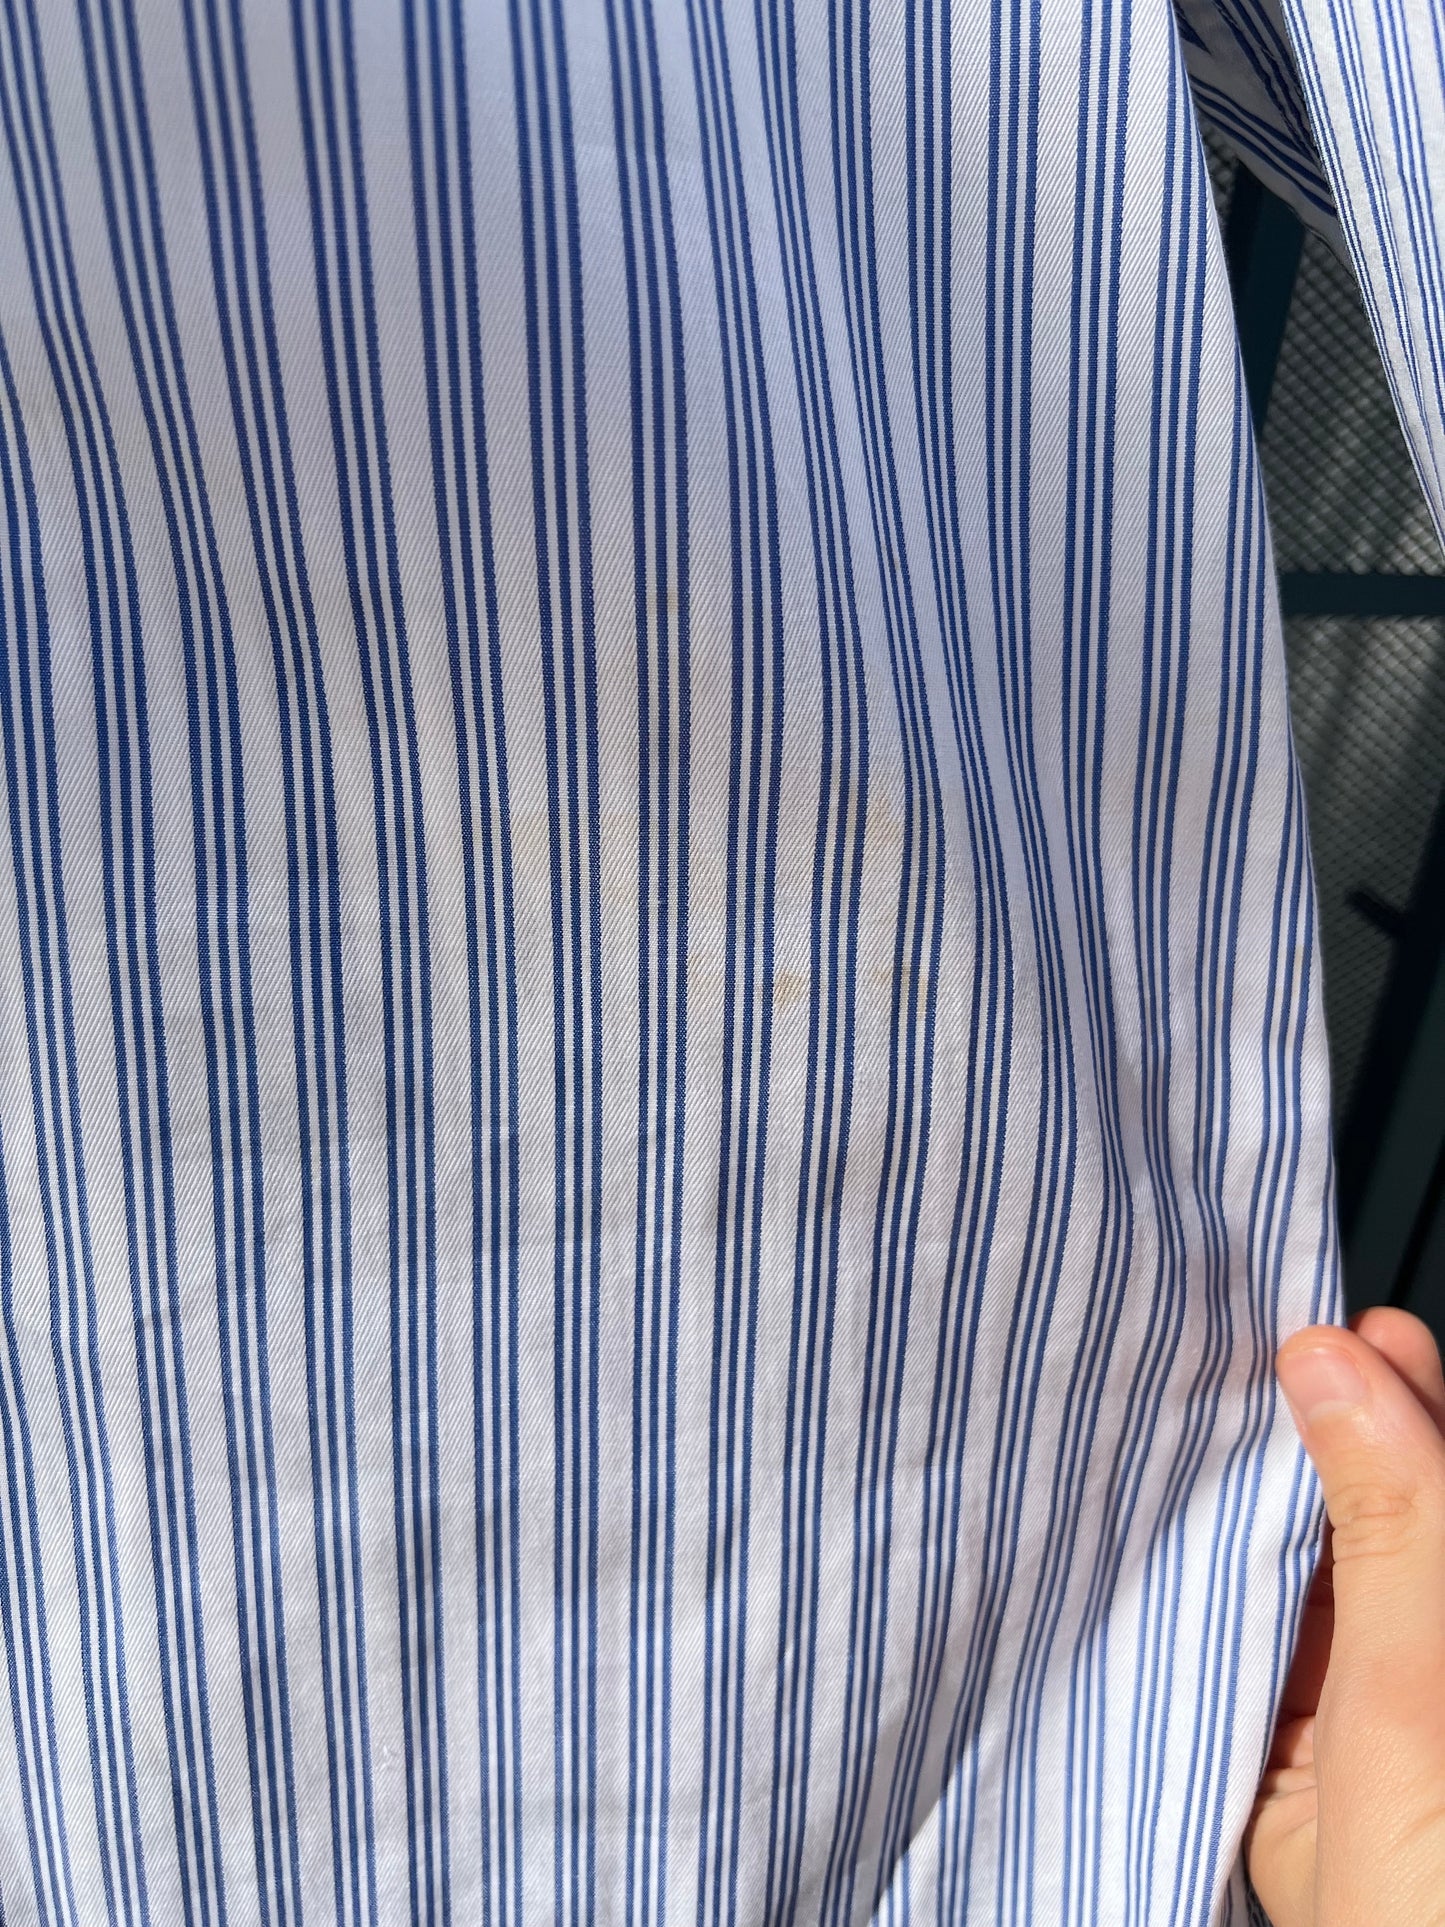 80s Turnbull & Asser Ltd blue and white stripe shirt